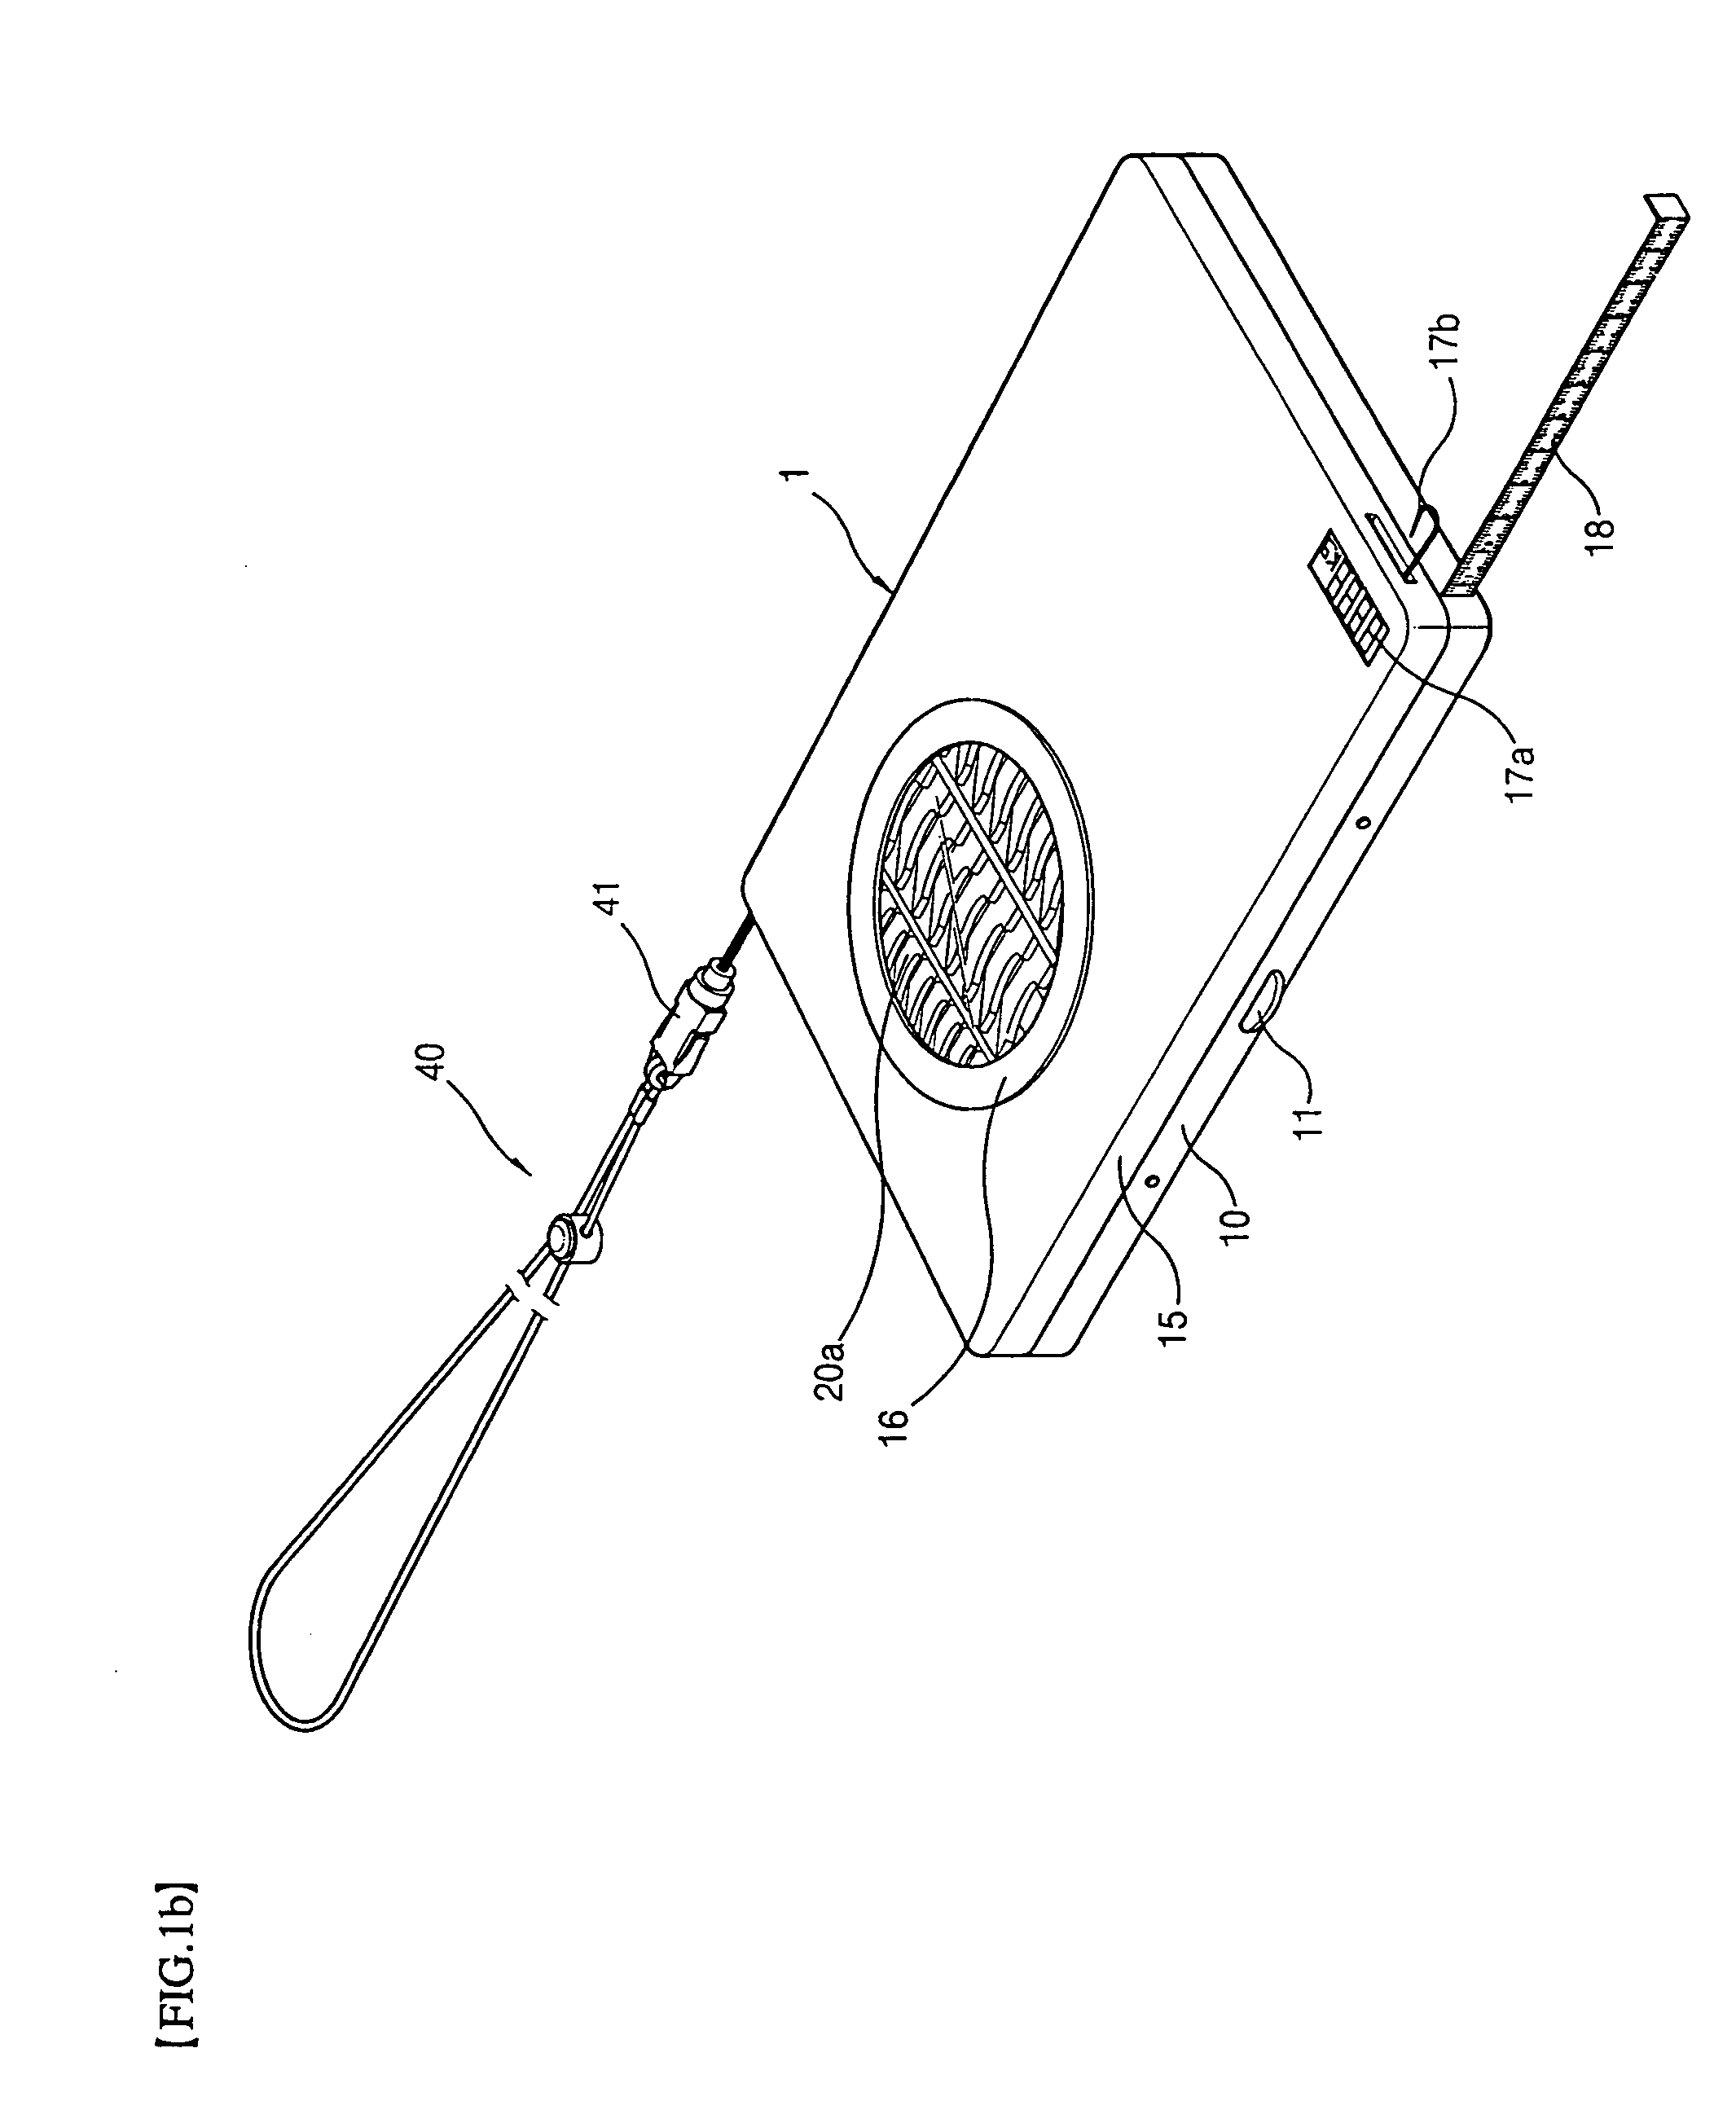 Multi purpose fish-hook case including fishline binding device